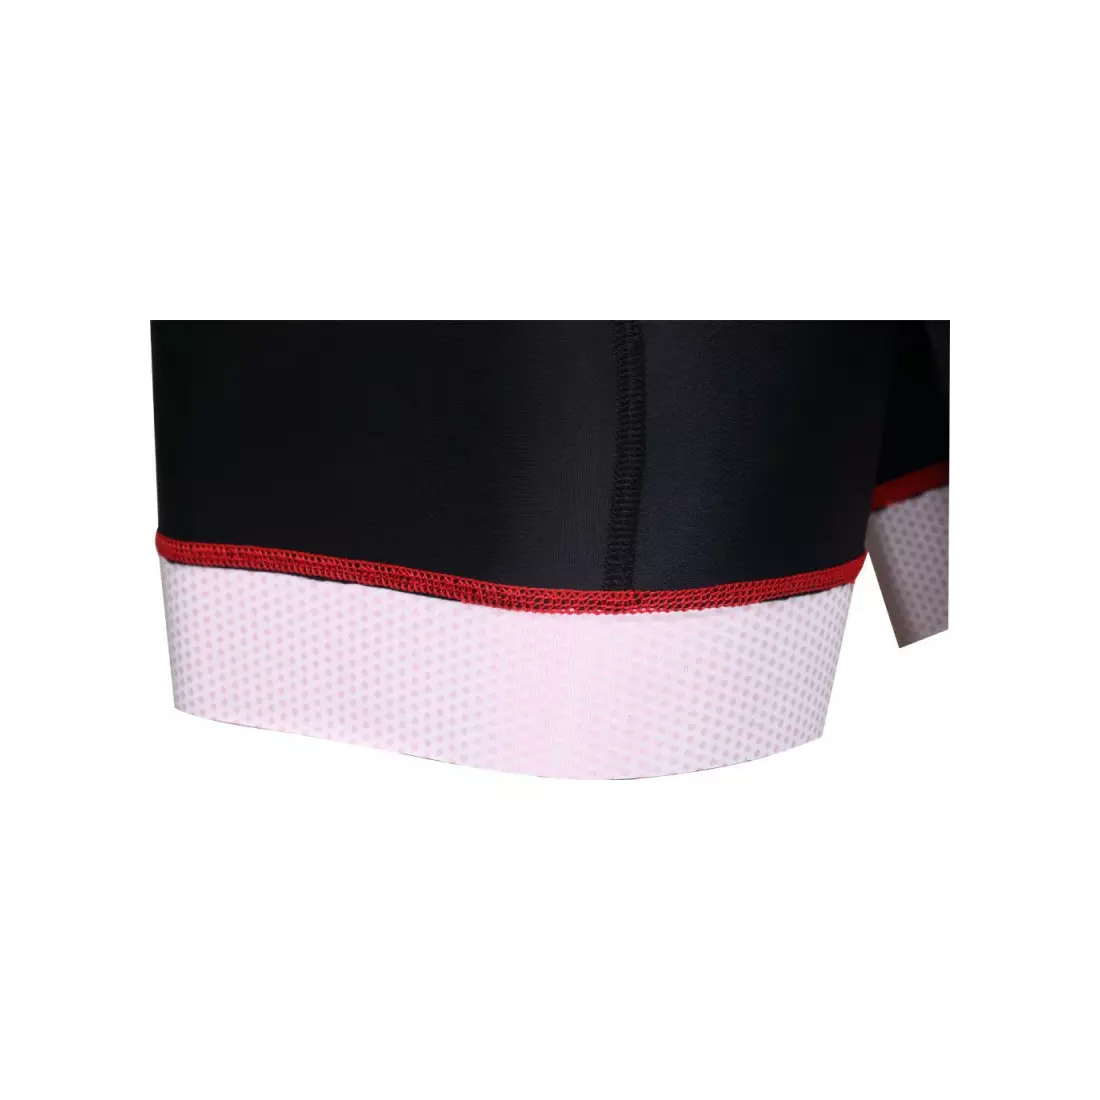 DEKO STYLE men's cycling shorts, black and white